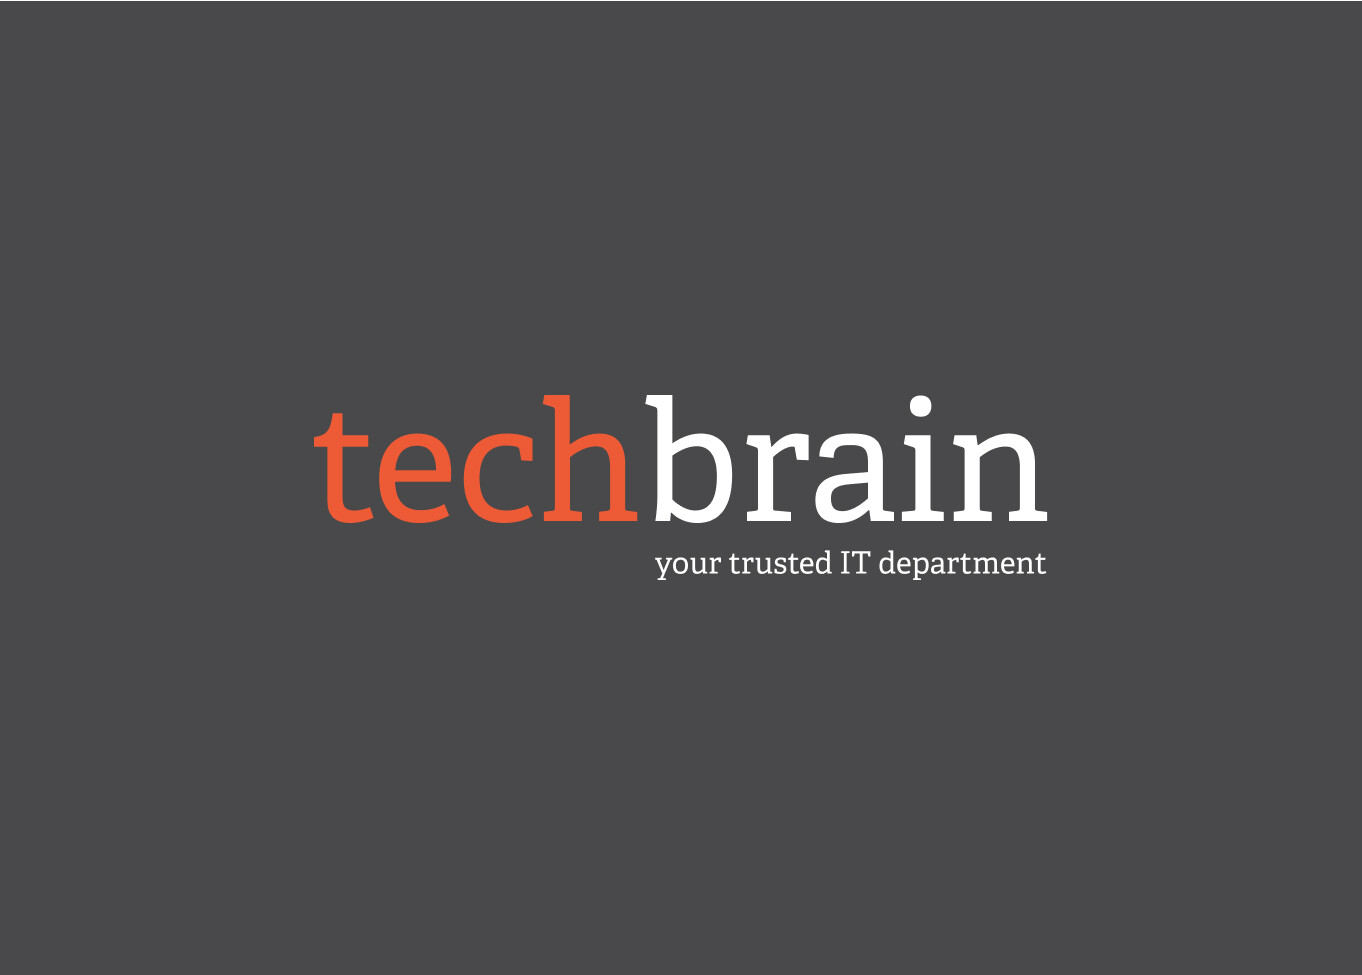 techbrain, grey logo